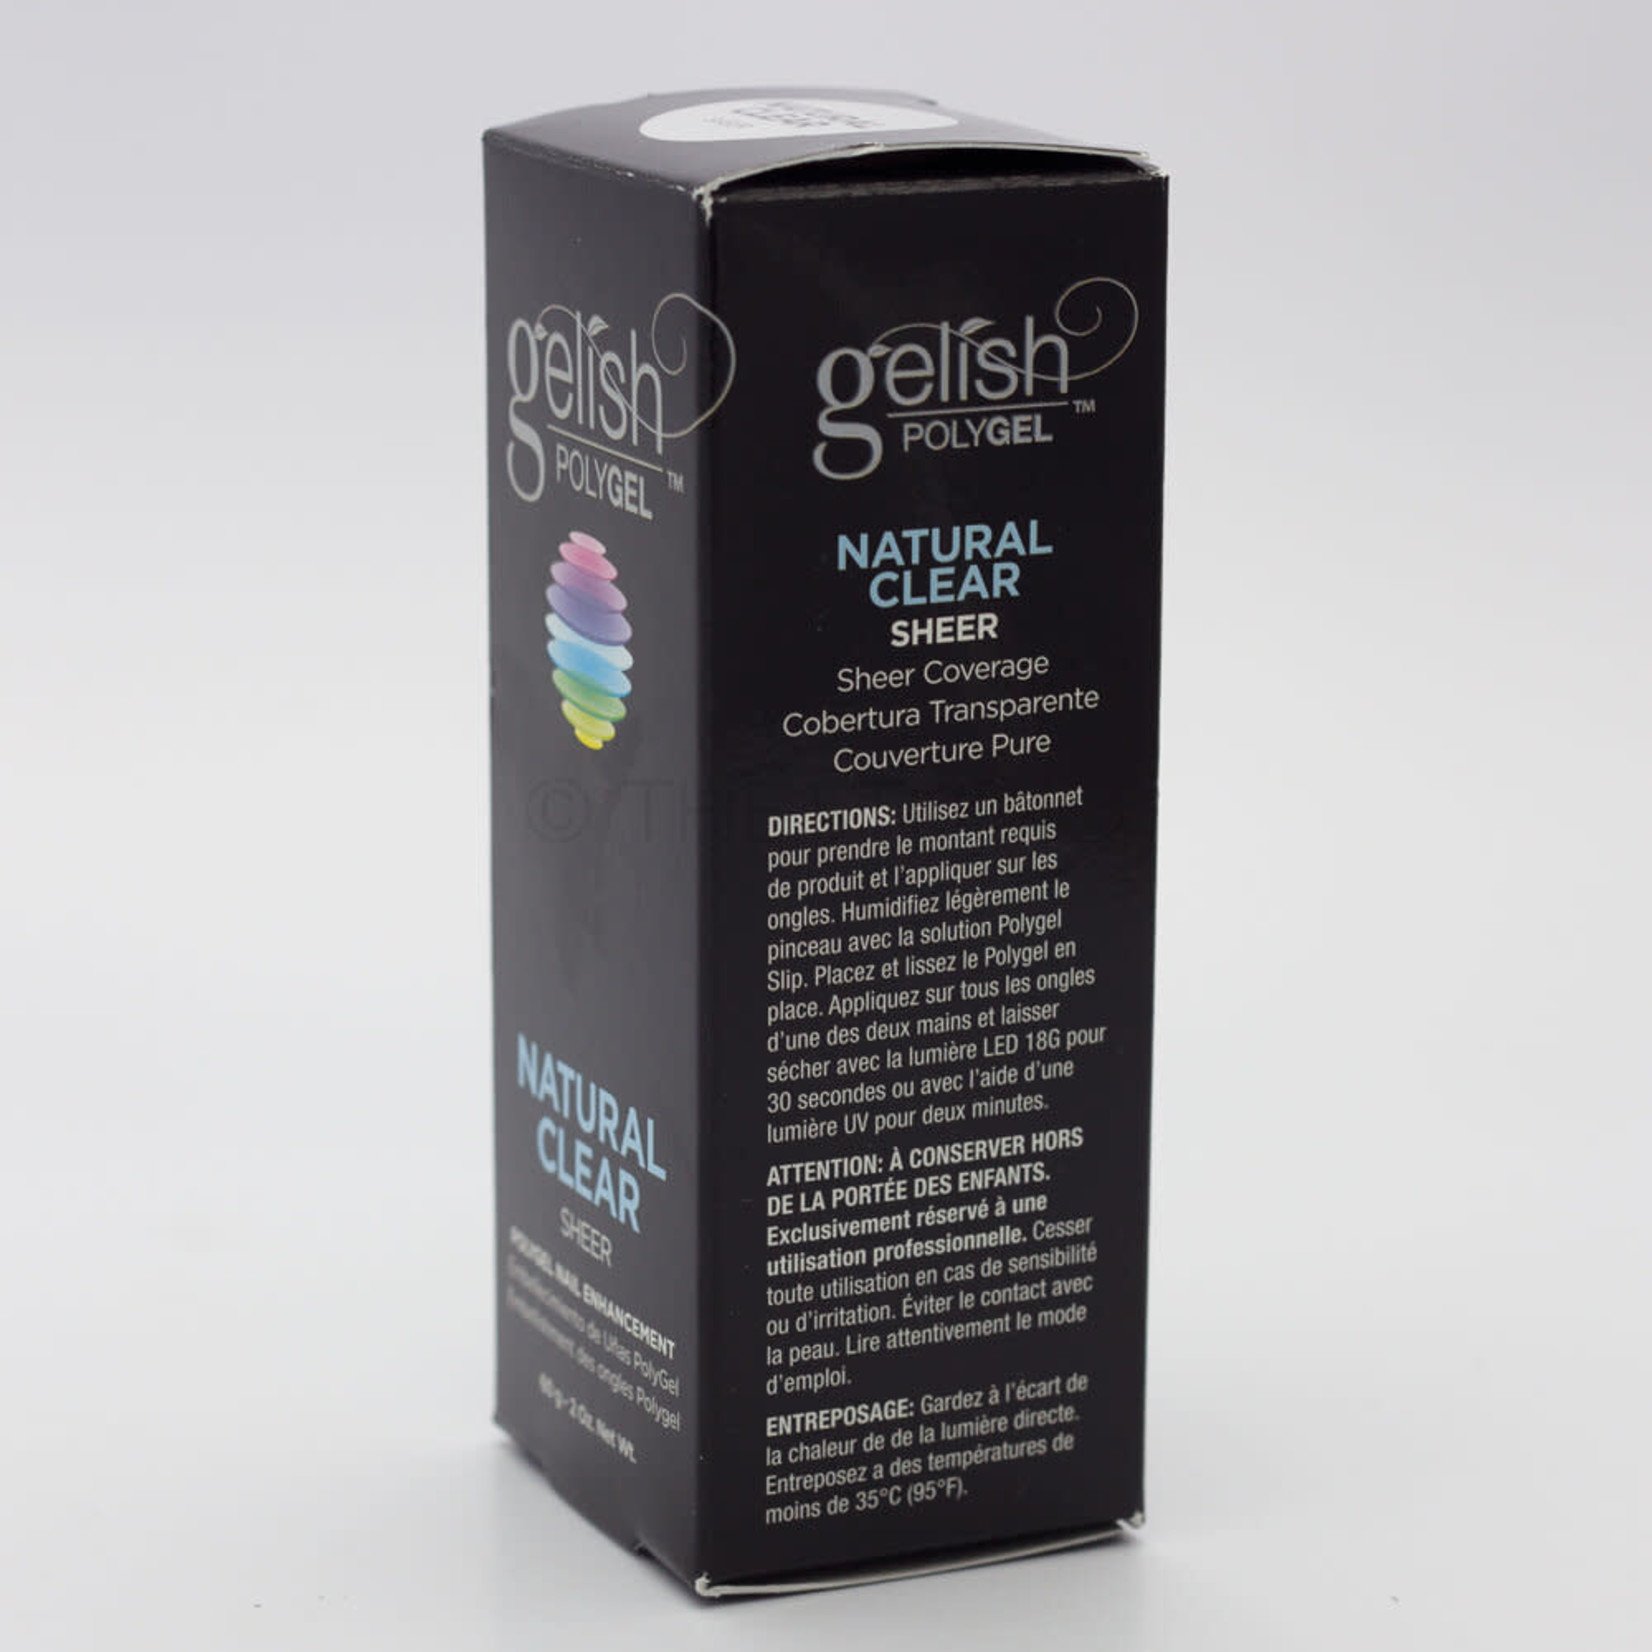 Gelish Gelish - Polygel - Natural Clear